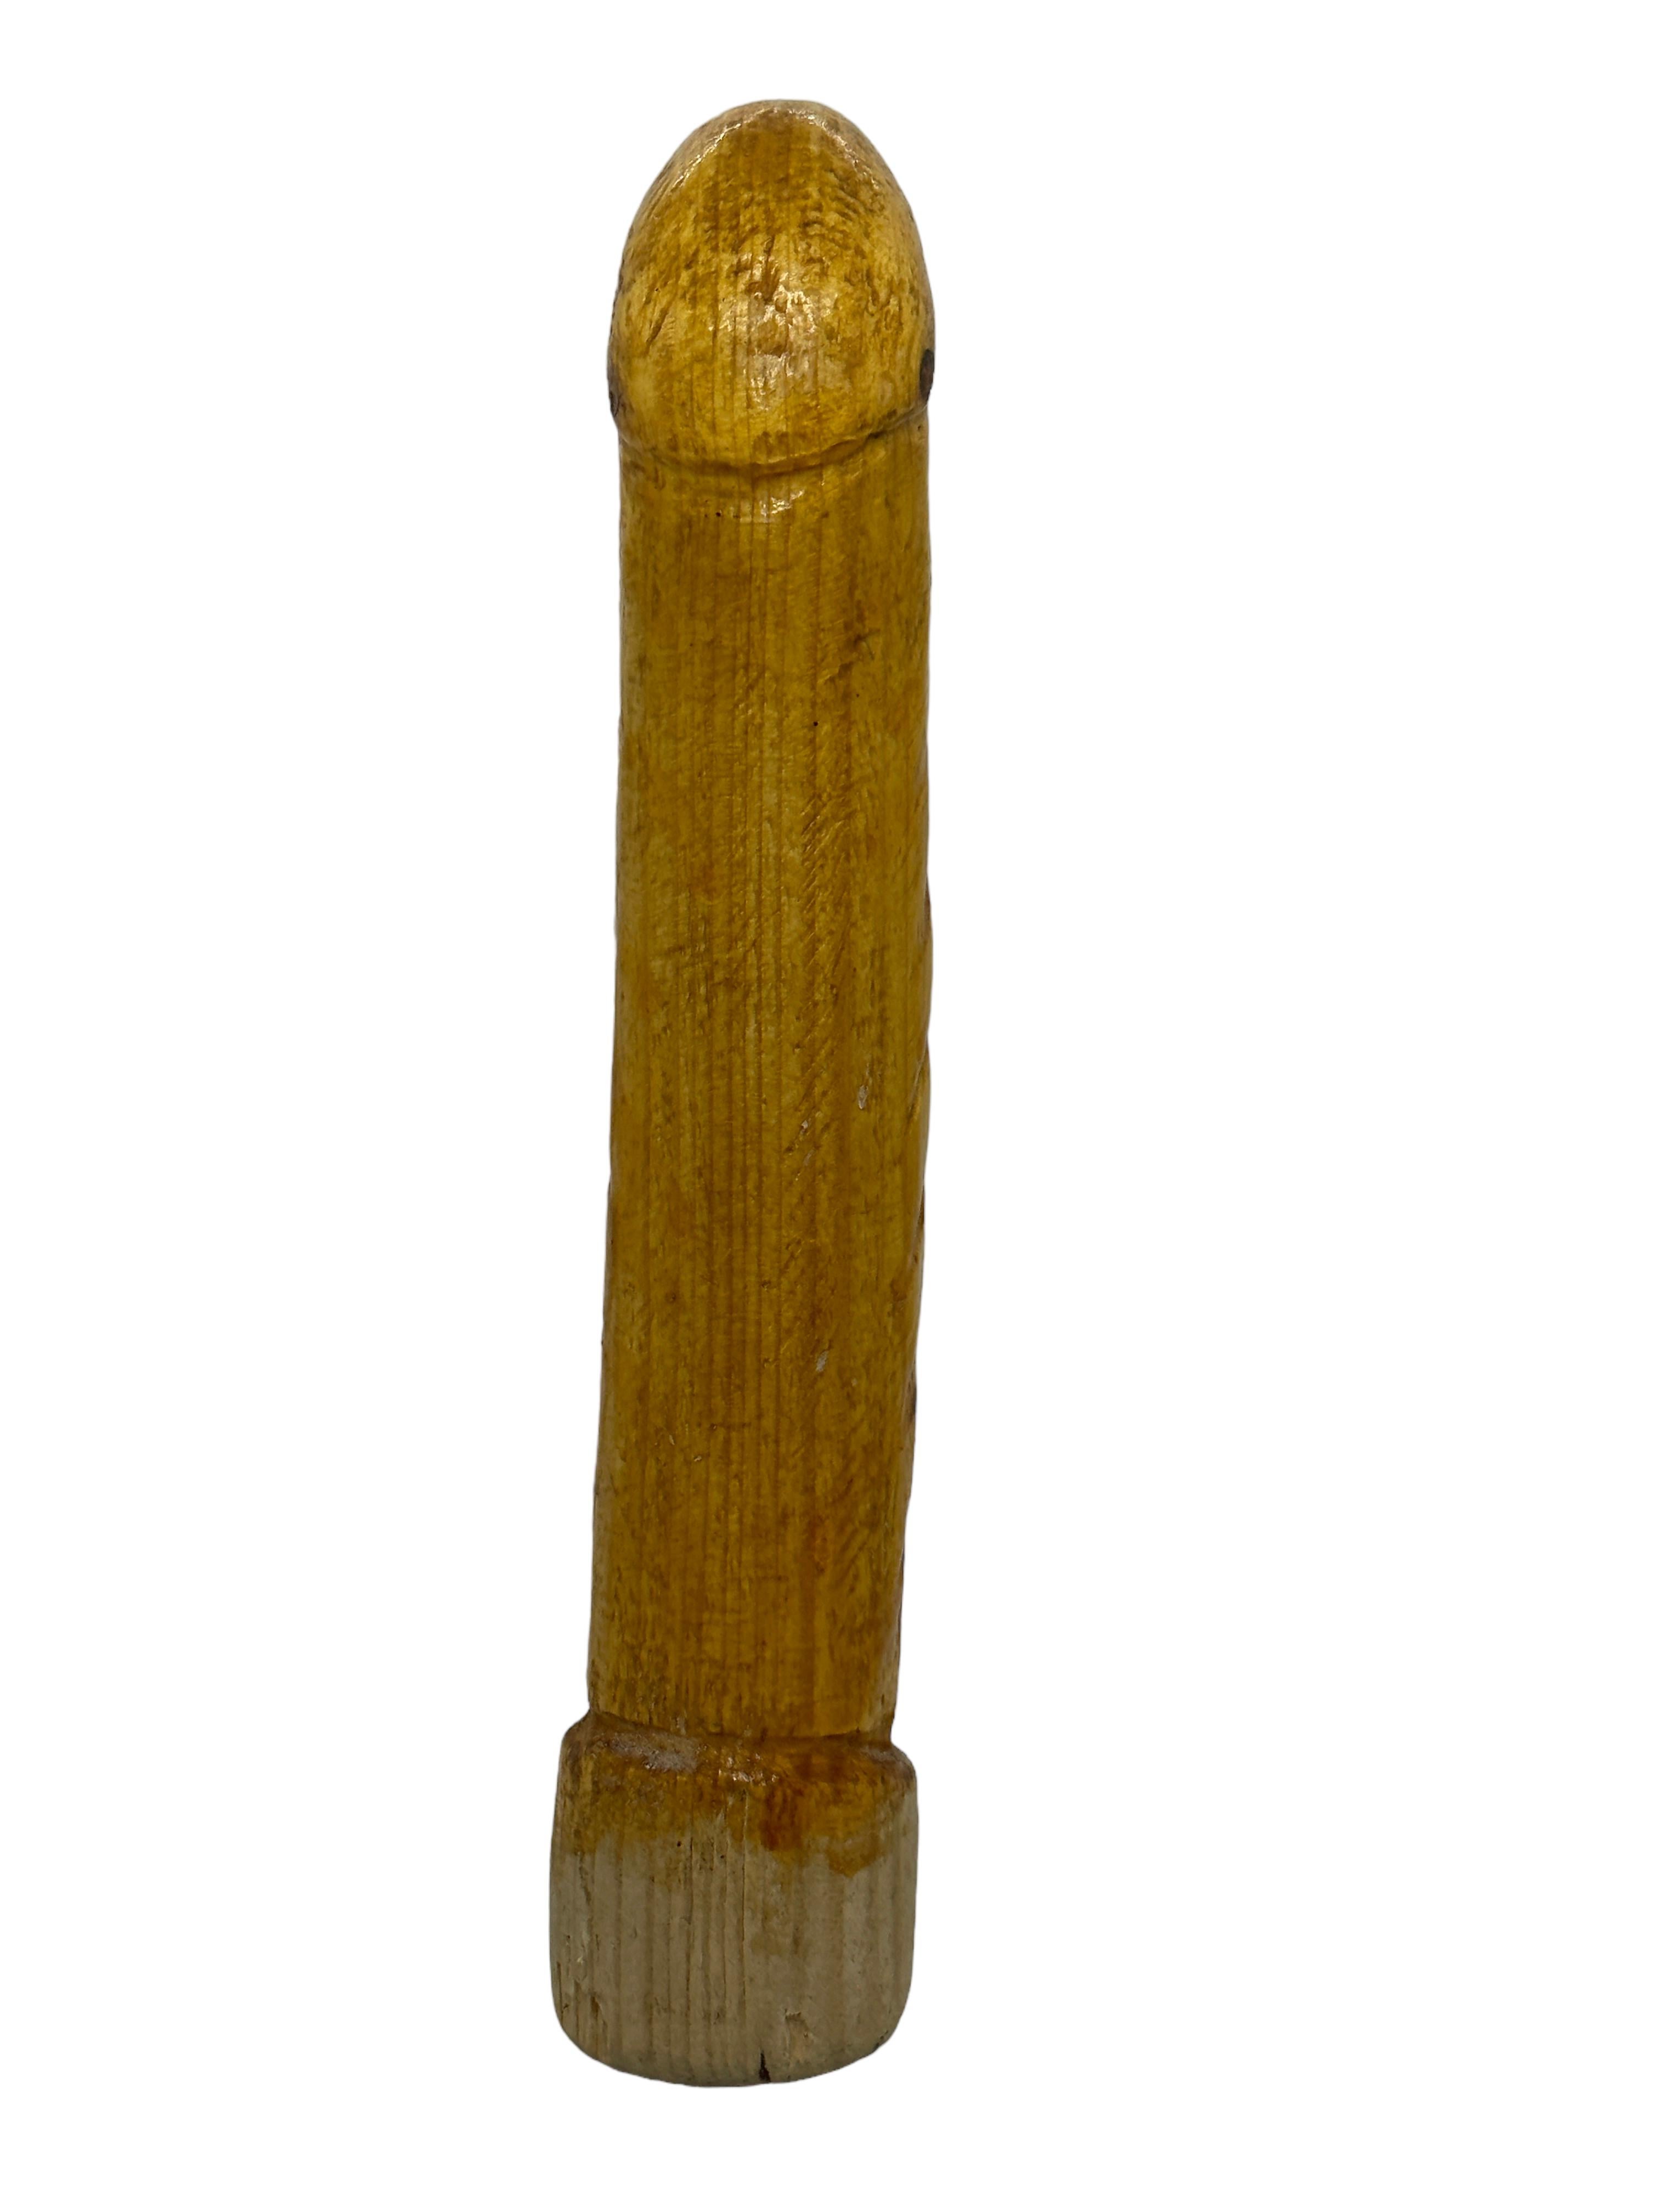 Japanese Wood Carving Penis Figurine Wabi Sabi Object Vintage Asia 1950s For Sale